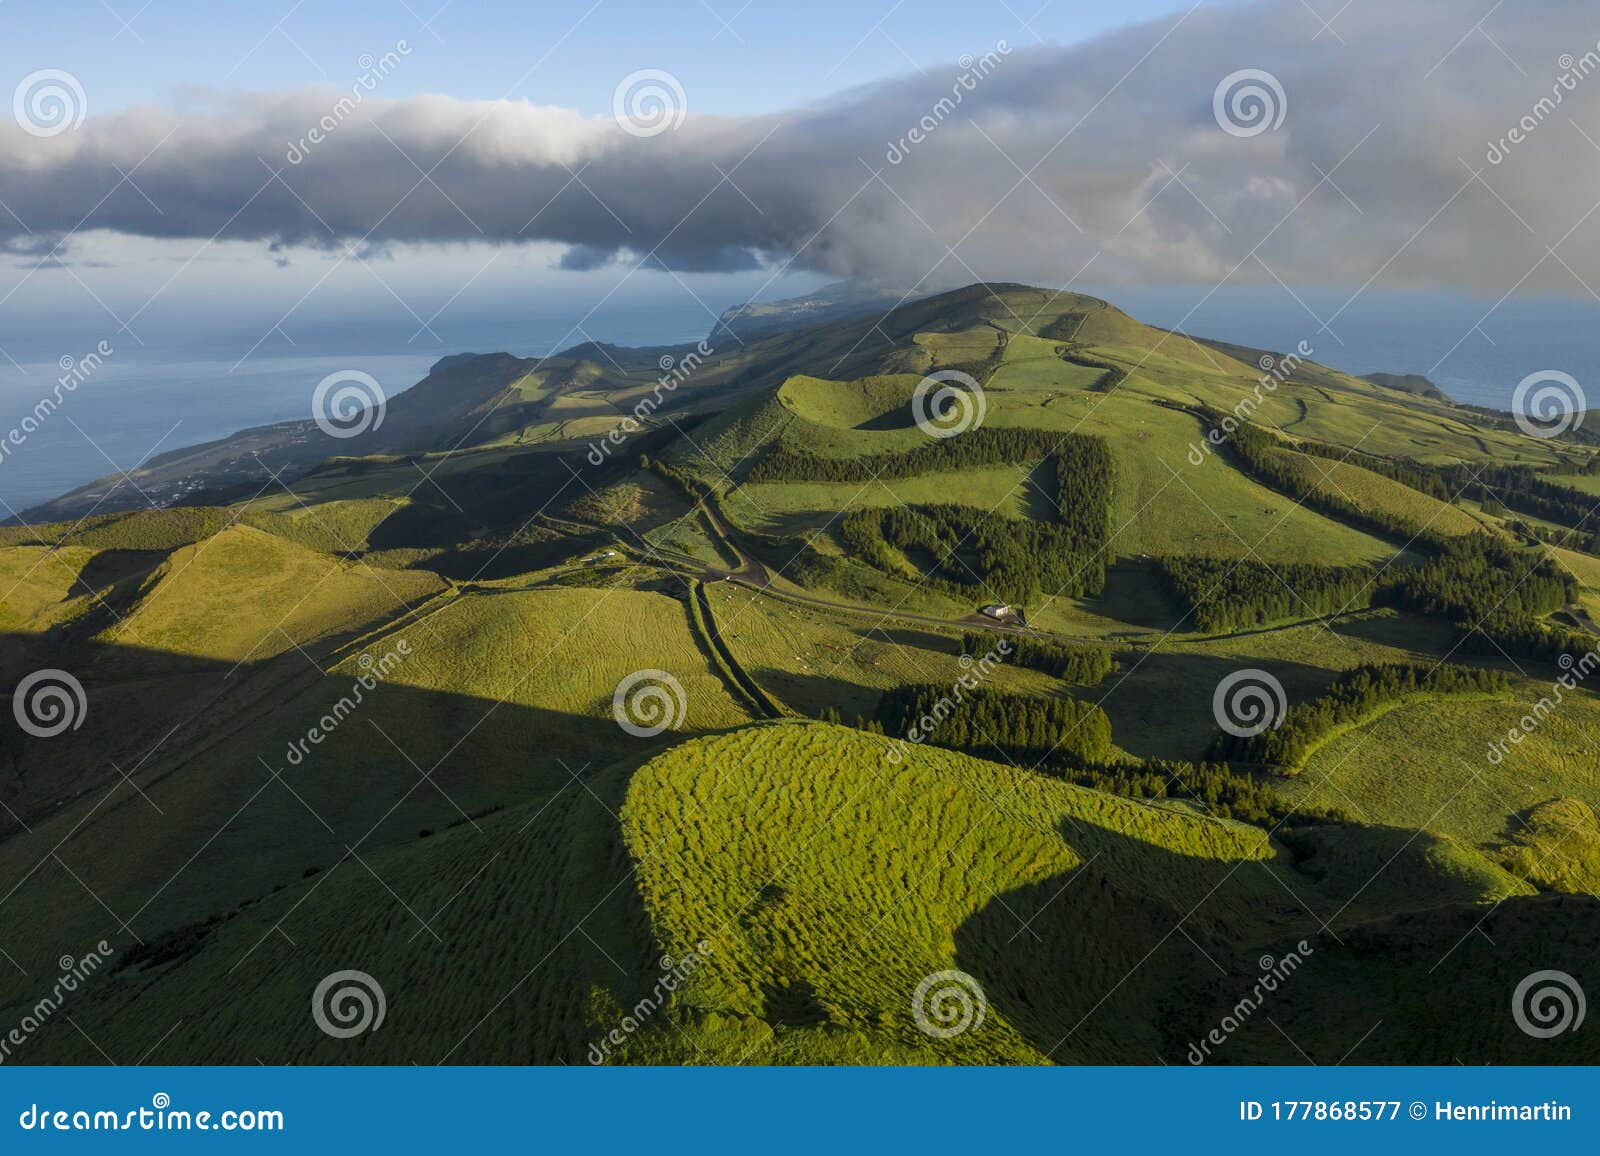 aerial image showing the volcanic mountains of the san jorge island in the azores, near pico de la esperanza